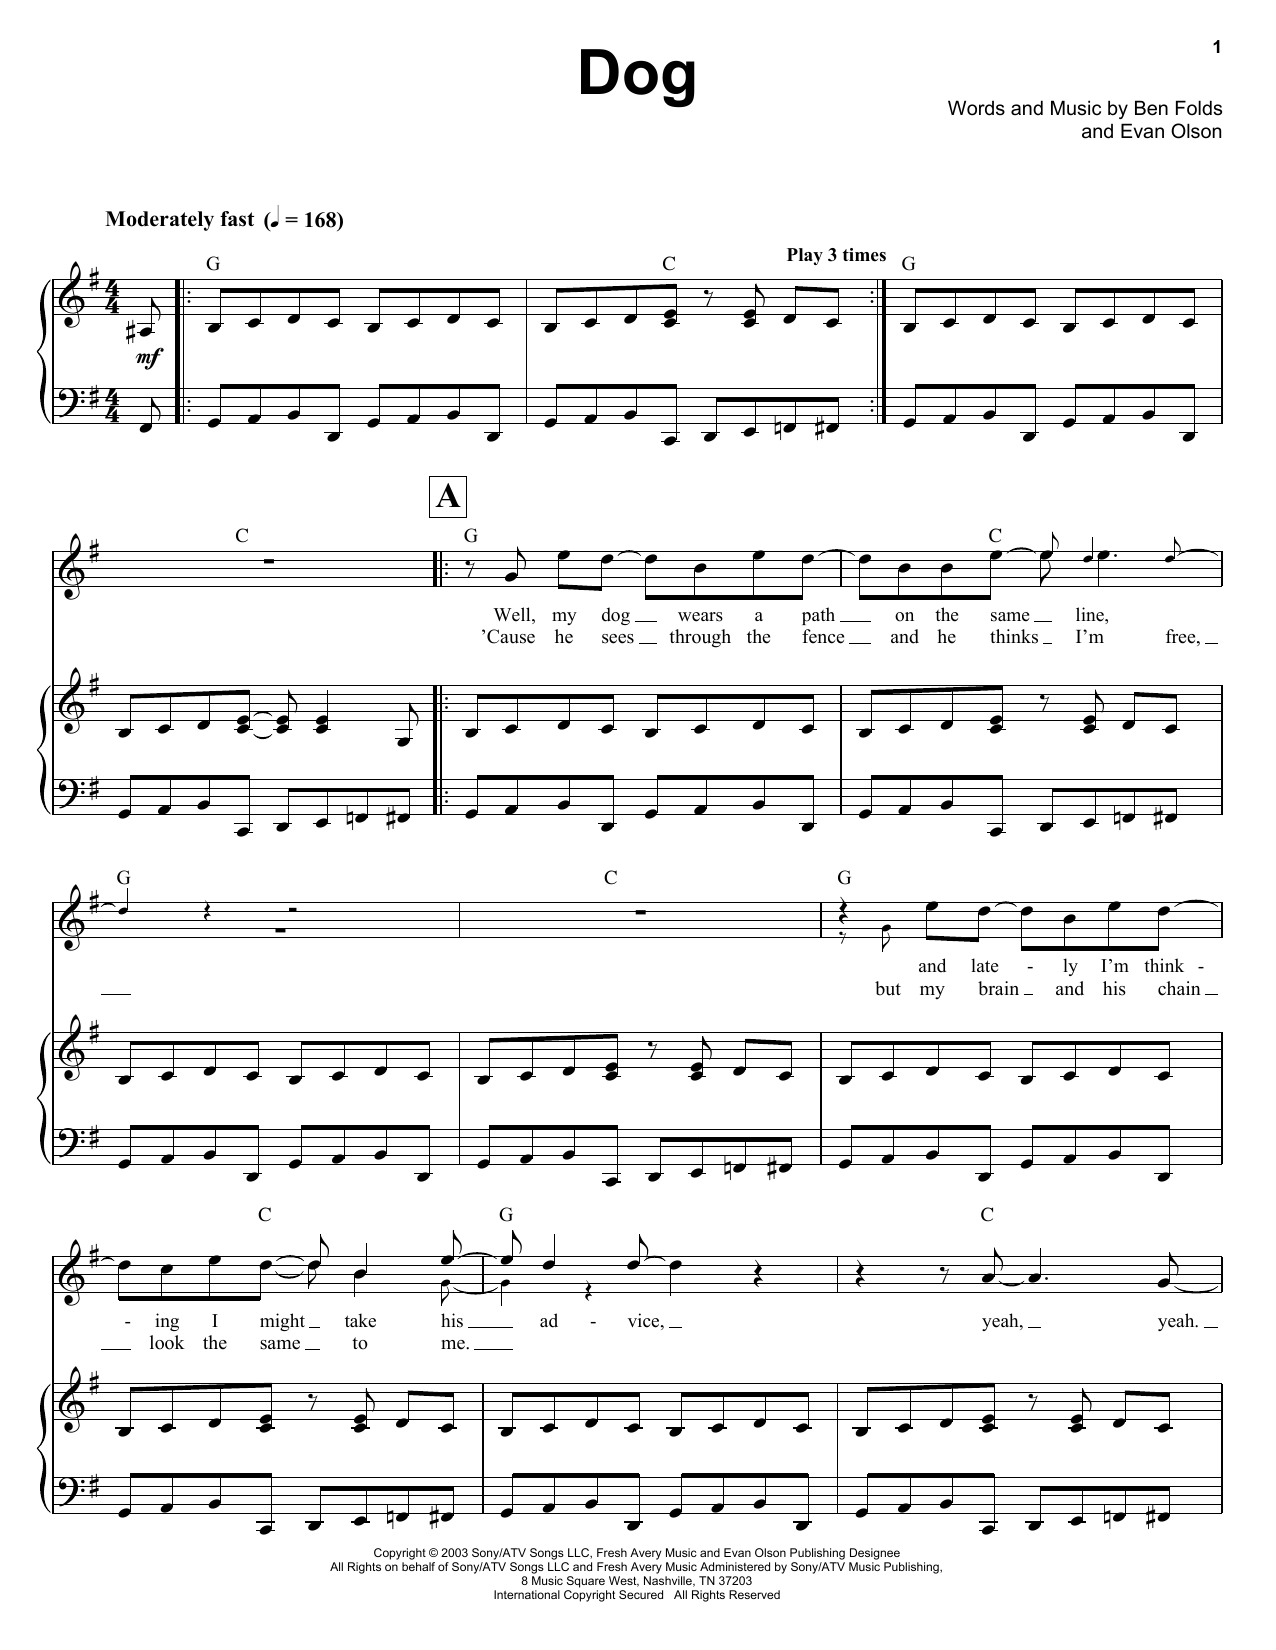 Ben Folds Dog Sheet Music Notes & Chords for Keyboard Transcription - Download or Print PDF